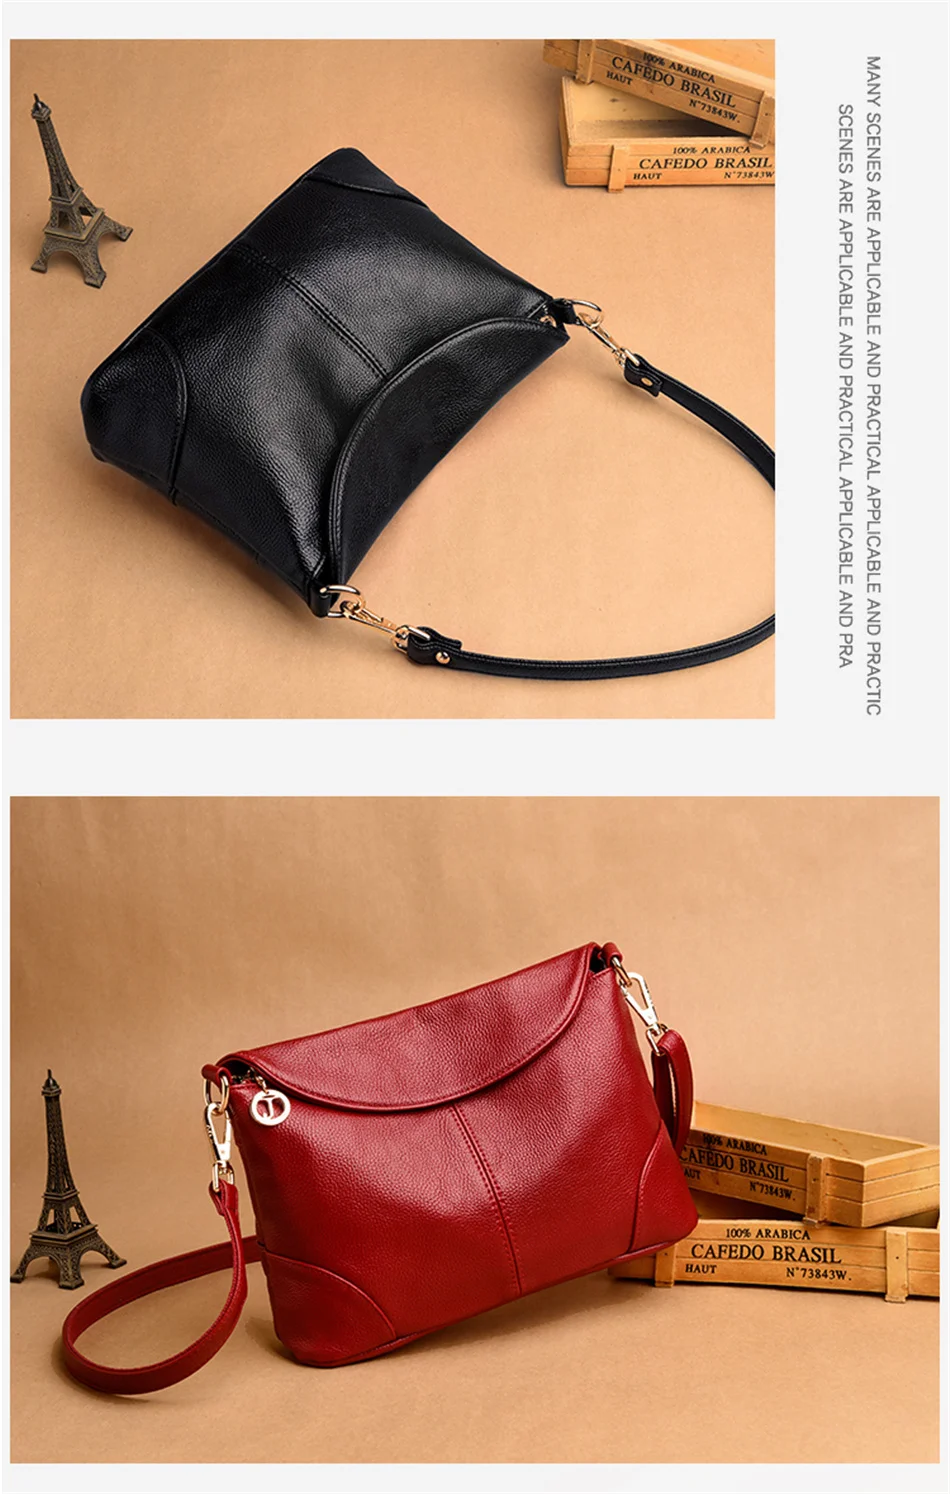 Leather Luxury Women Handbags Designer Messenger Bag Small Ladies Shoulder Hand Crossbody Bags For Women 2020 bolsas de mujer